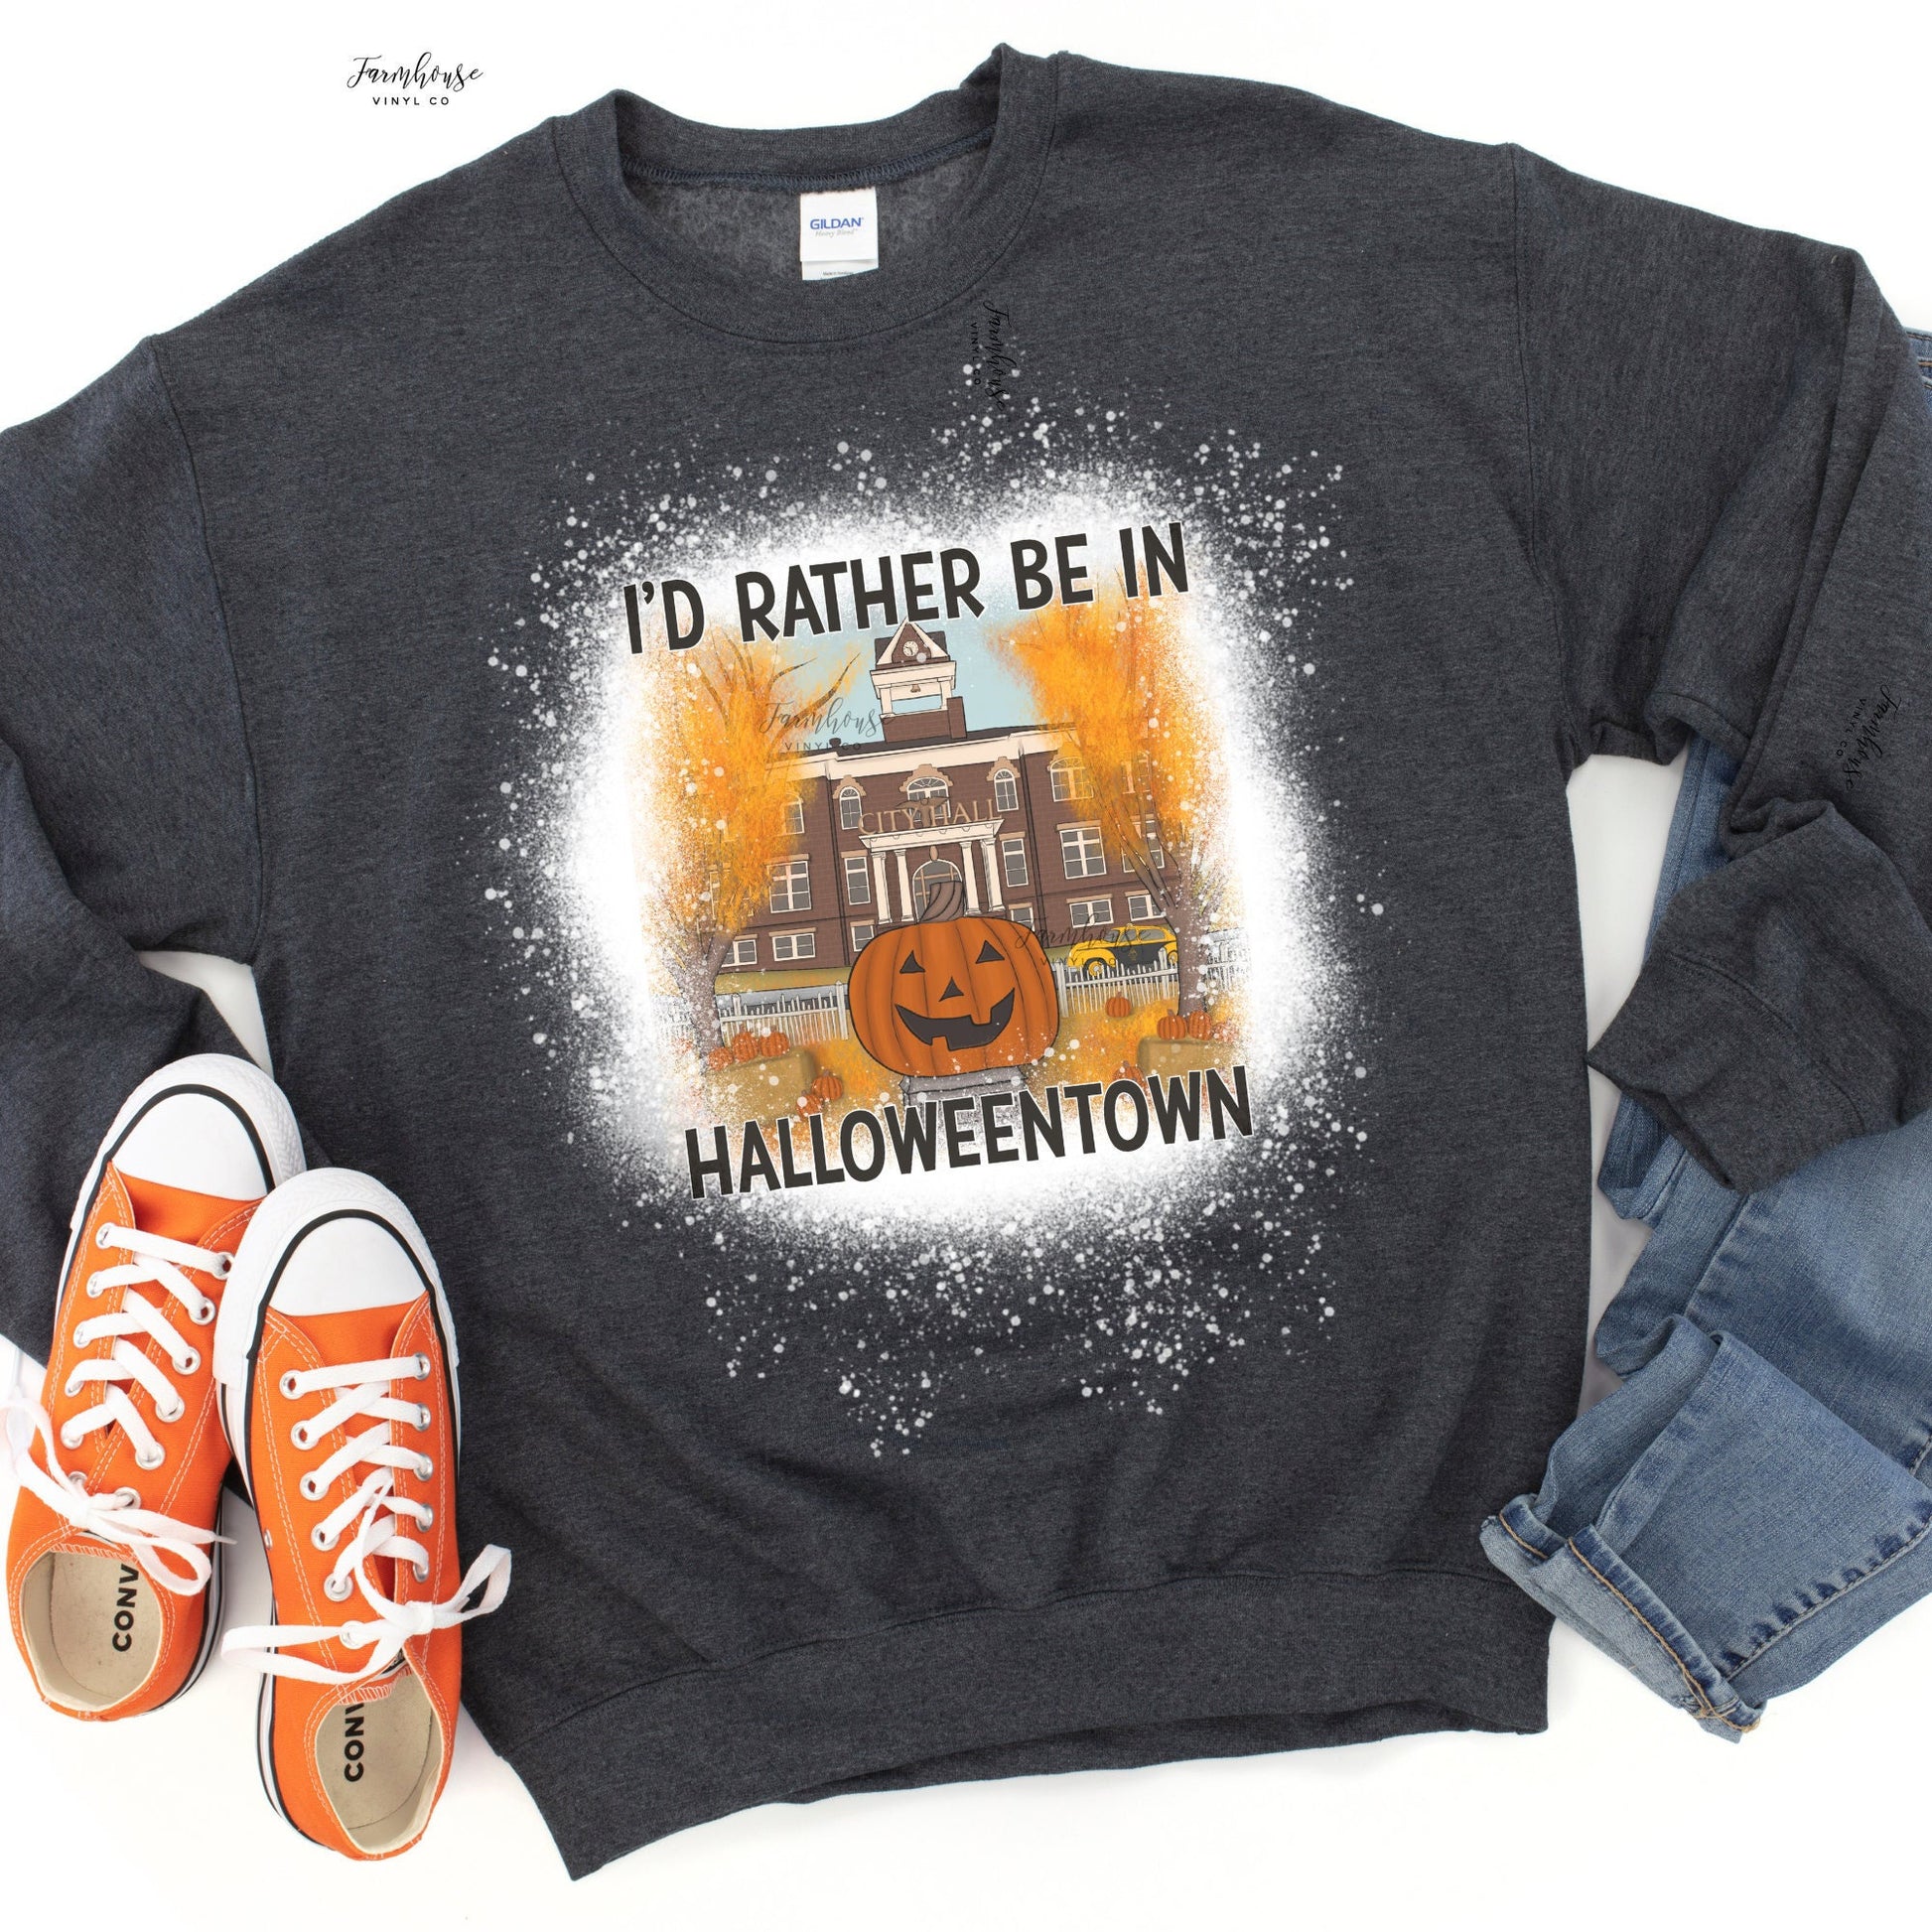 I'd Rather Be in Halloweentown Sweatshirt - Farmhouse Vinyl Co